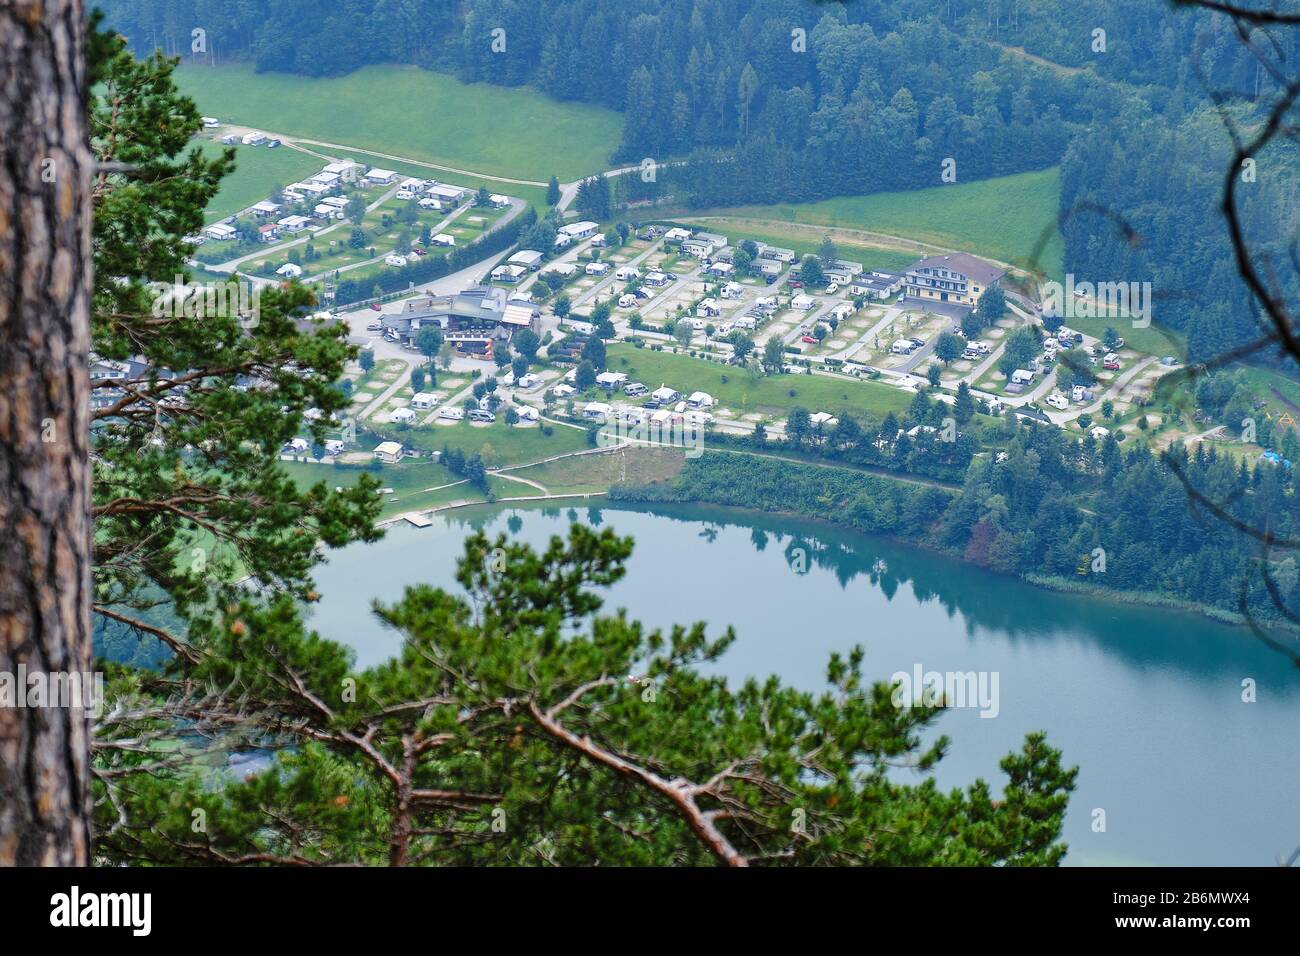 Camping Seeblick - Toni and Reintalersee lake in Austria - view ...